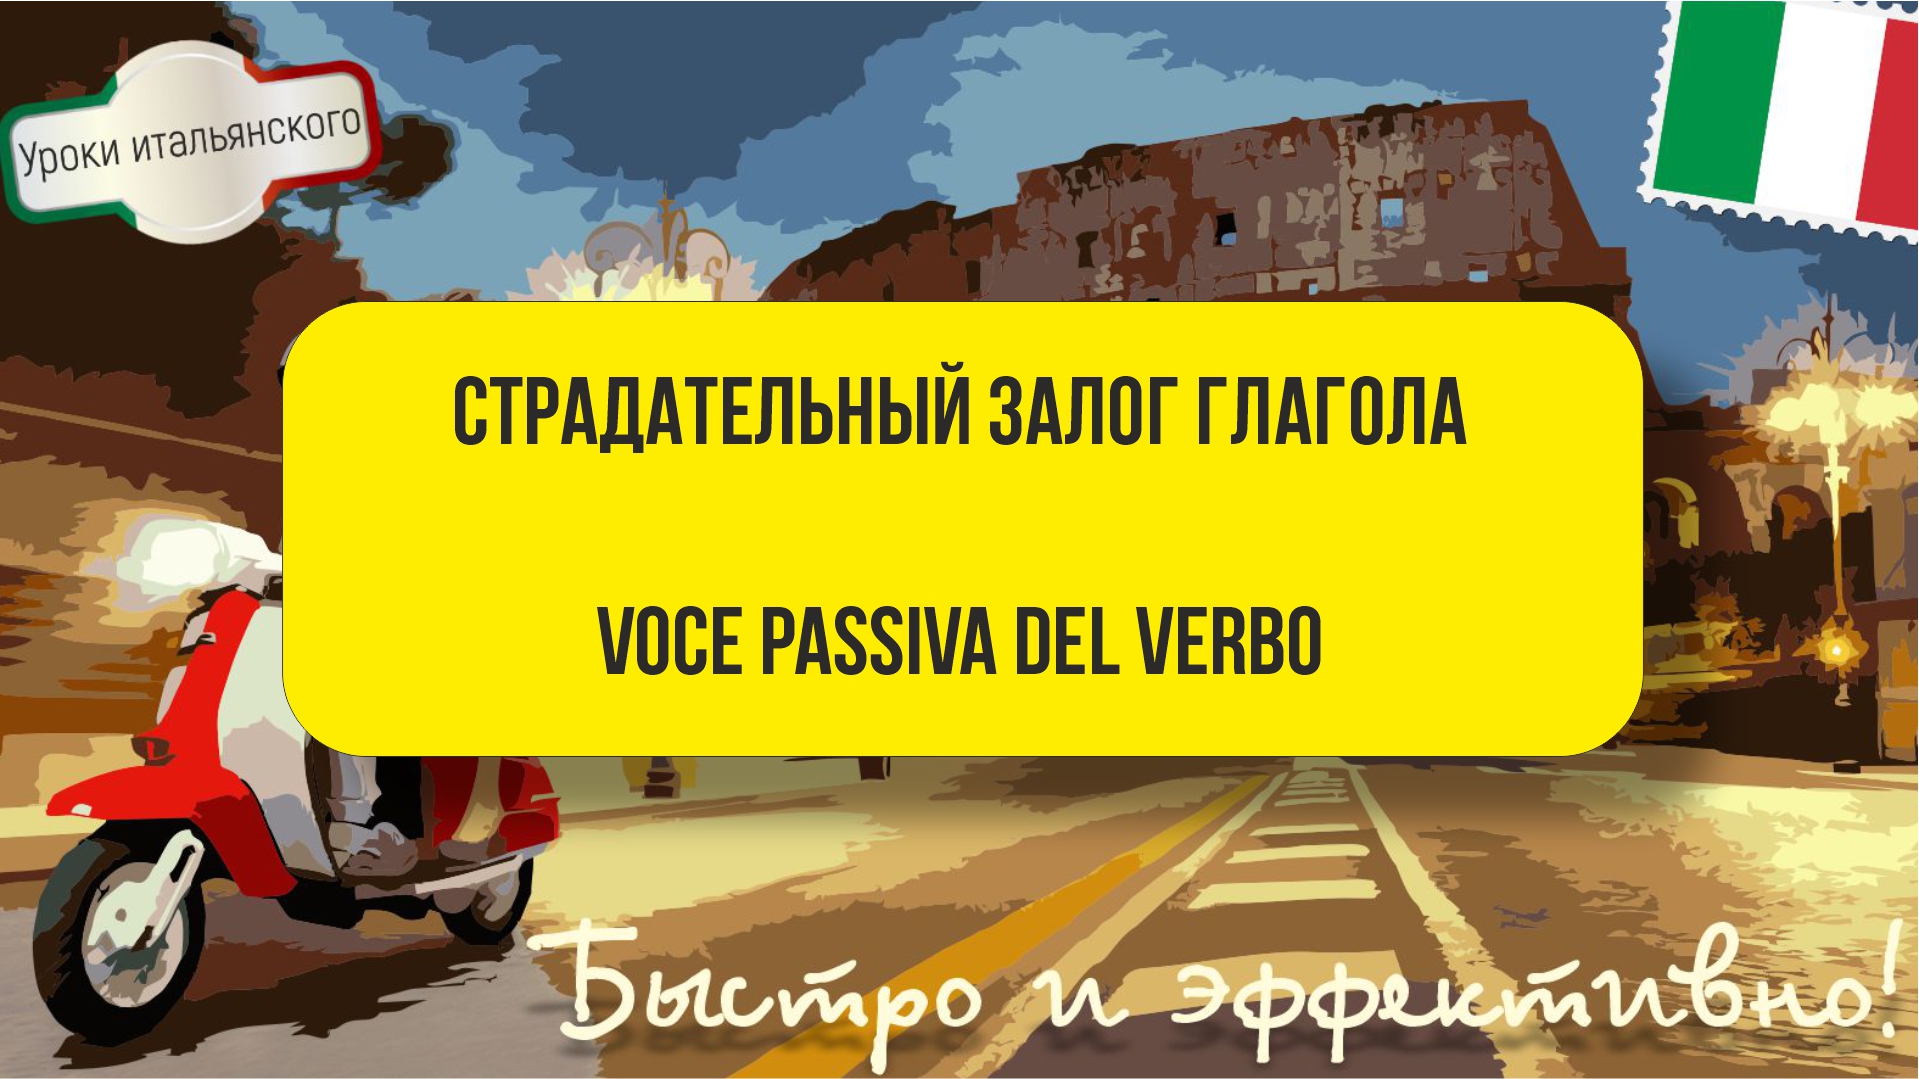 СТРАДАТЕЛЬНЫЙ ЗАЛОГ ГЛАГОЛА - VOCE PASSIVA DEL VERBO #voce #passiva #залог #страдательный #италия